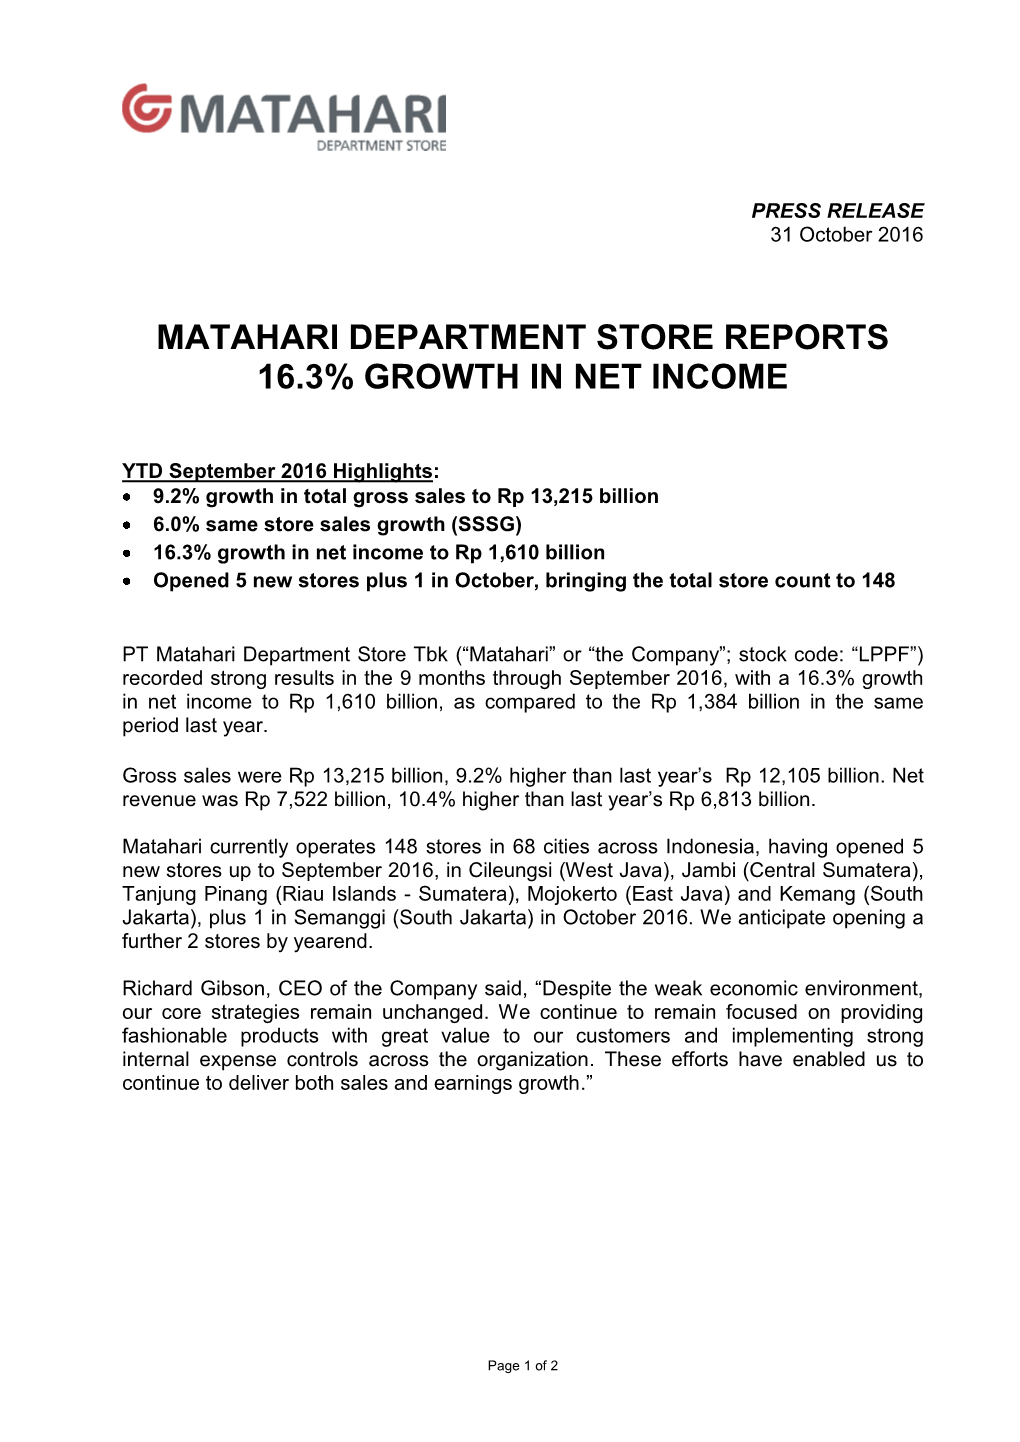 Matahari Department Store Reports 16.3% Growth in Net Income